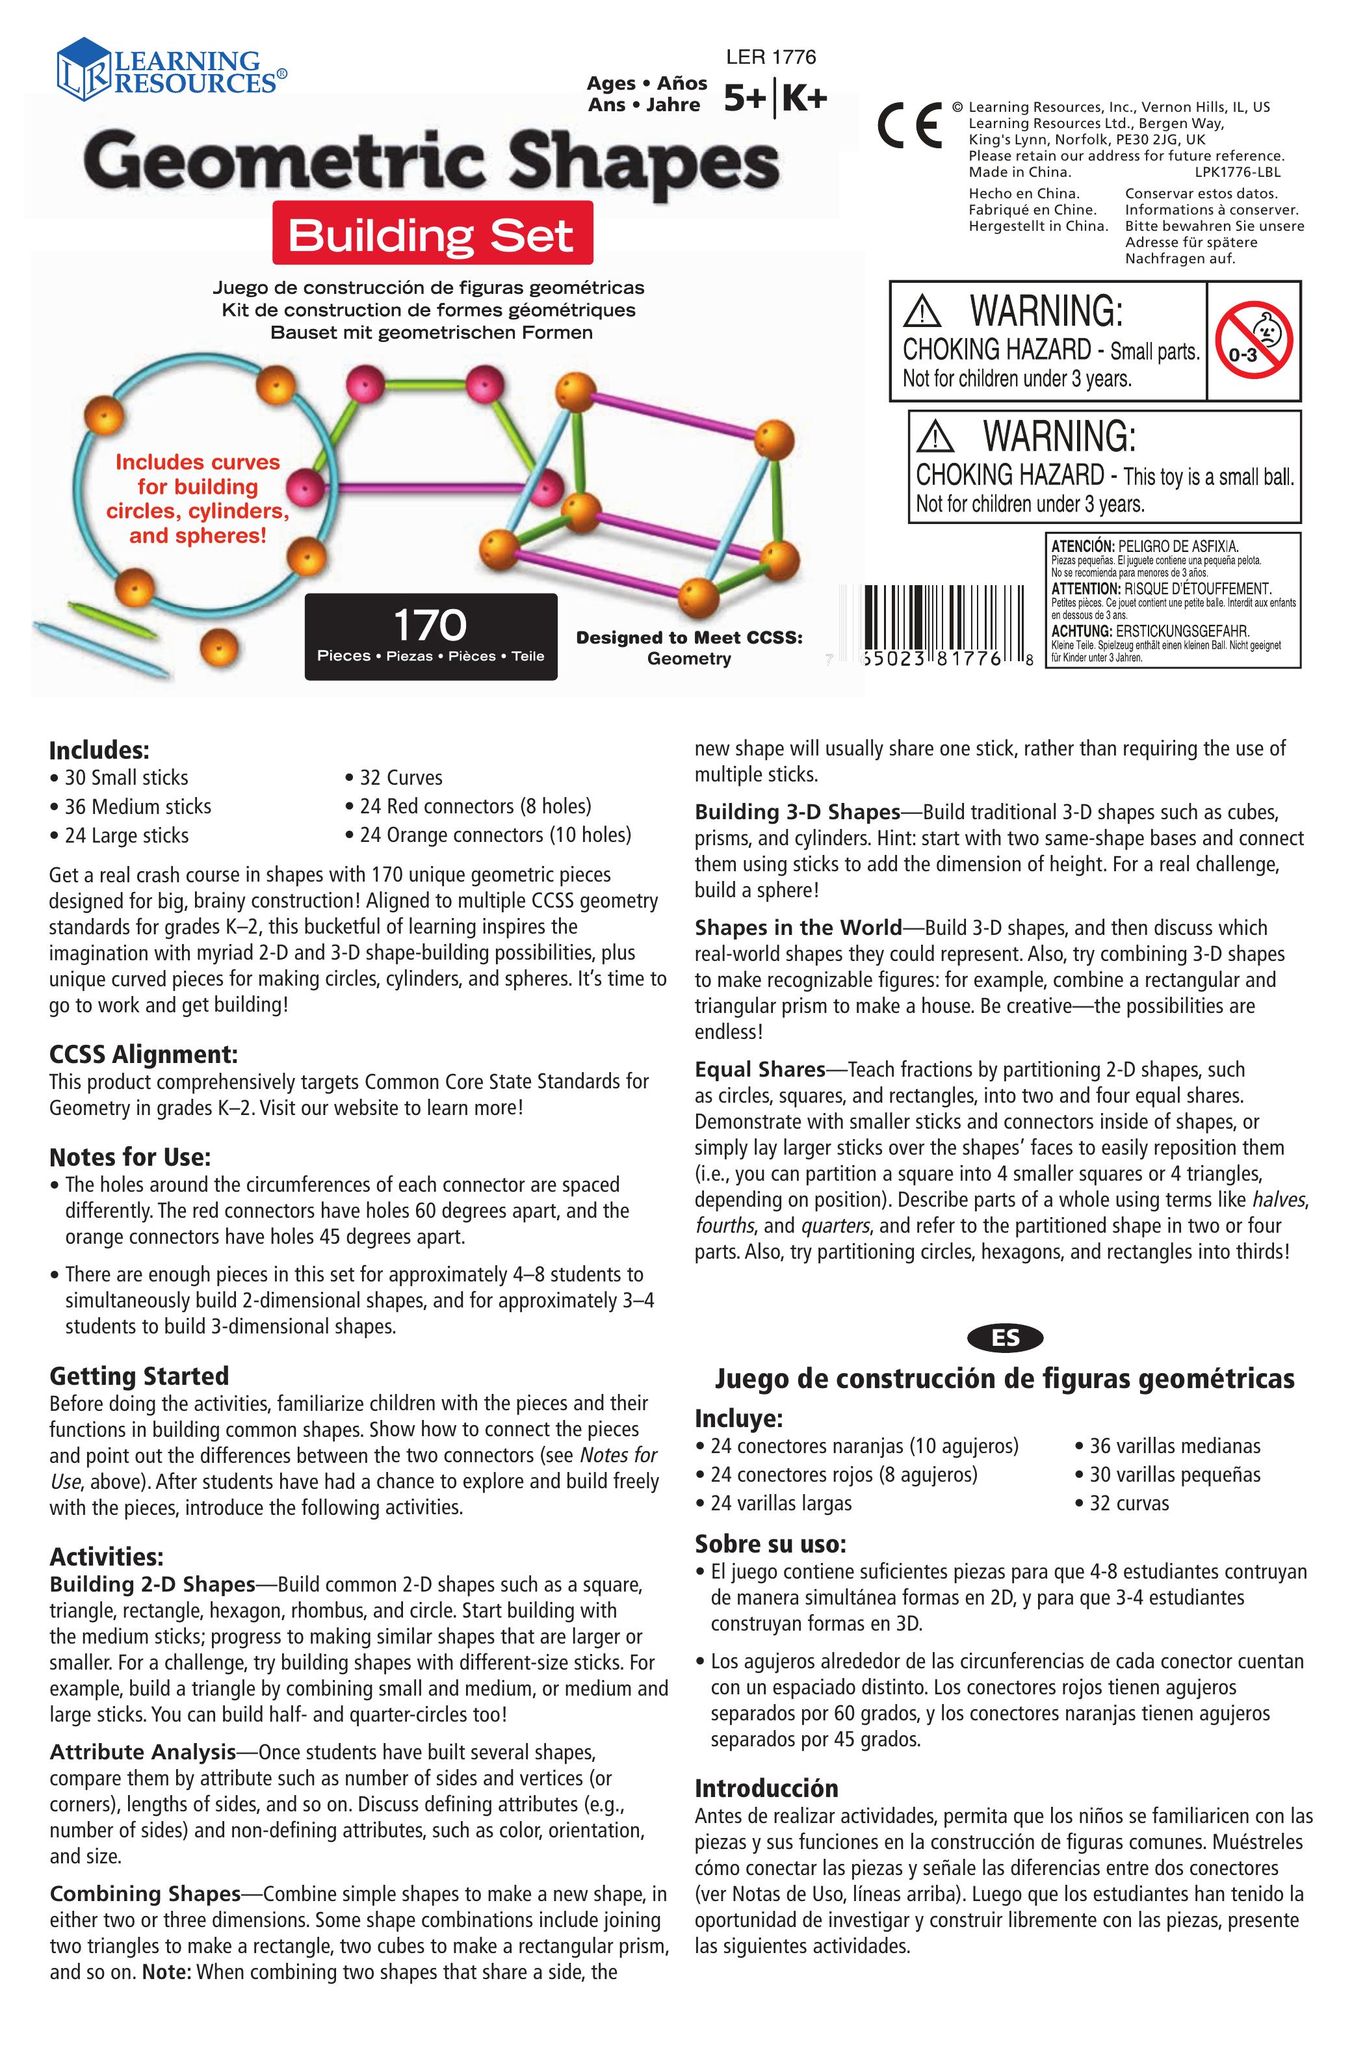 Learning Resources LER 1776 Handheld Game System User Manual